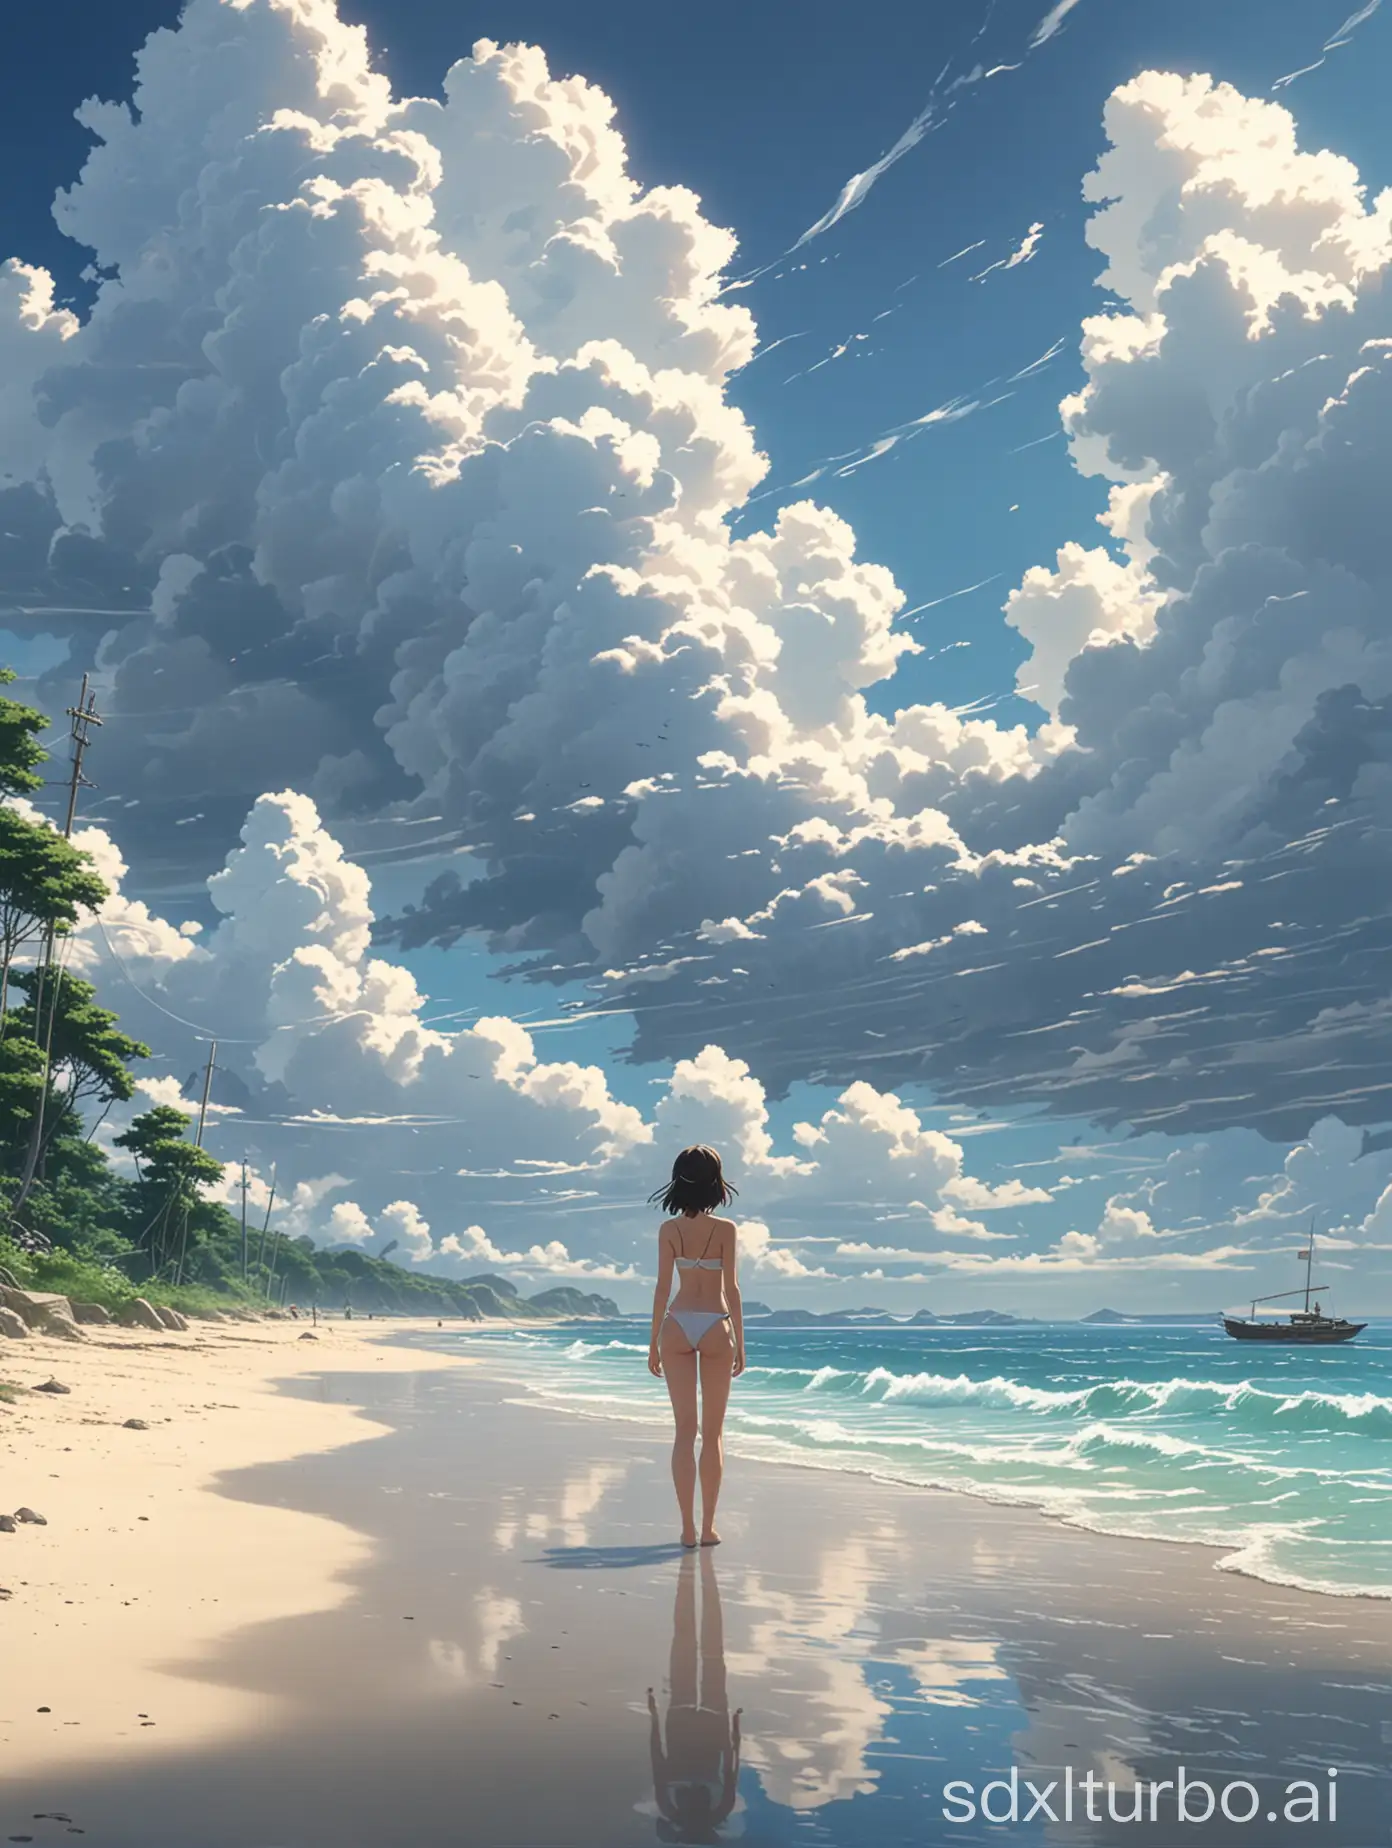 makoto shinkai style,full of tall fluffy white clouds,far below is a Oceanshore with a girl wearing 2 piece bikini standing,shadows,cinematic,white sand,ship afar,studio Ghibli anime